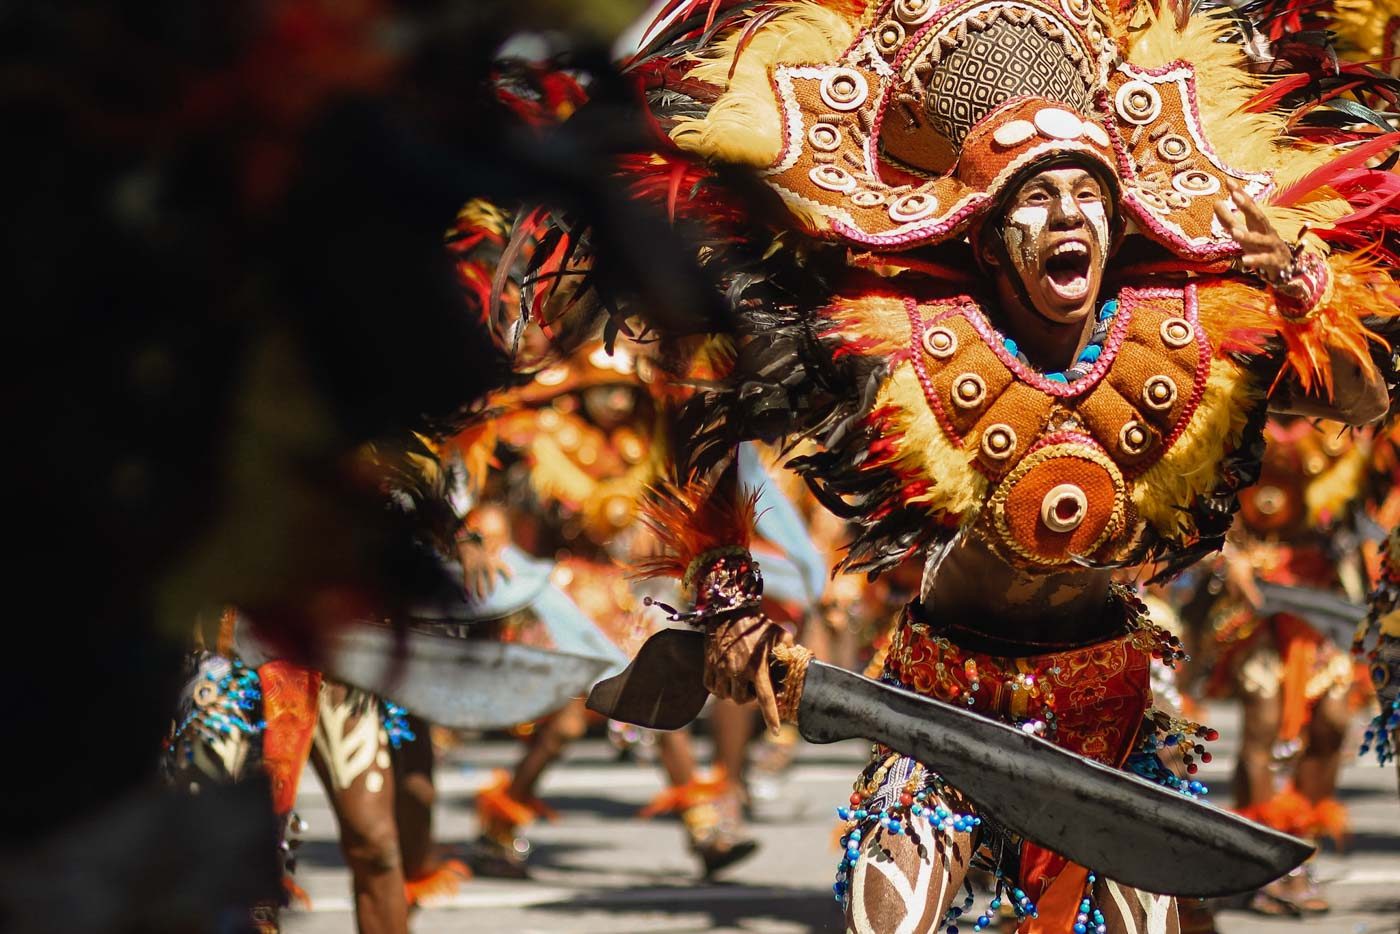 IN PHOTOS: 2020 Dinagyang Festival celebrates devotion to Sto Niño in full color